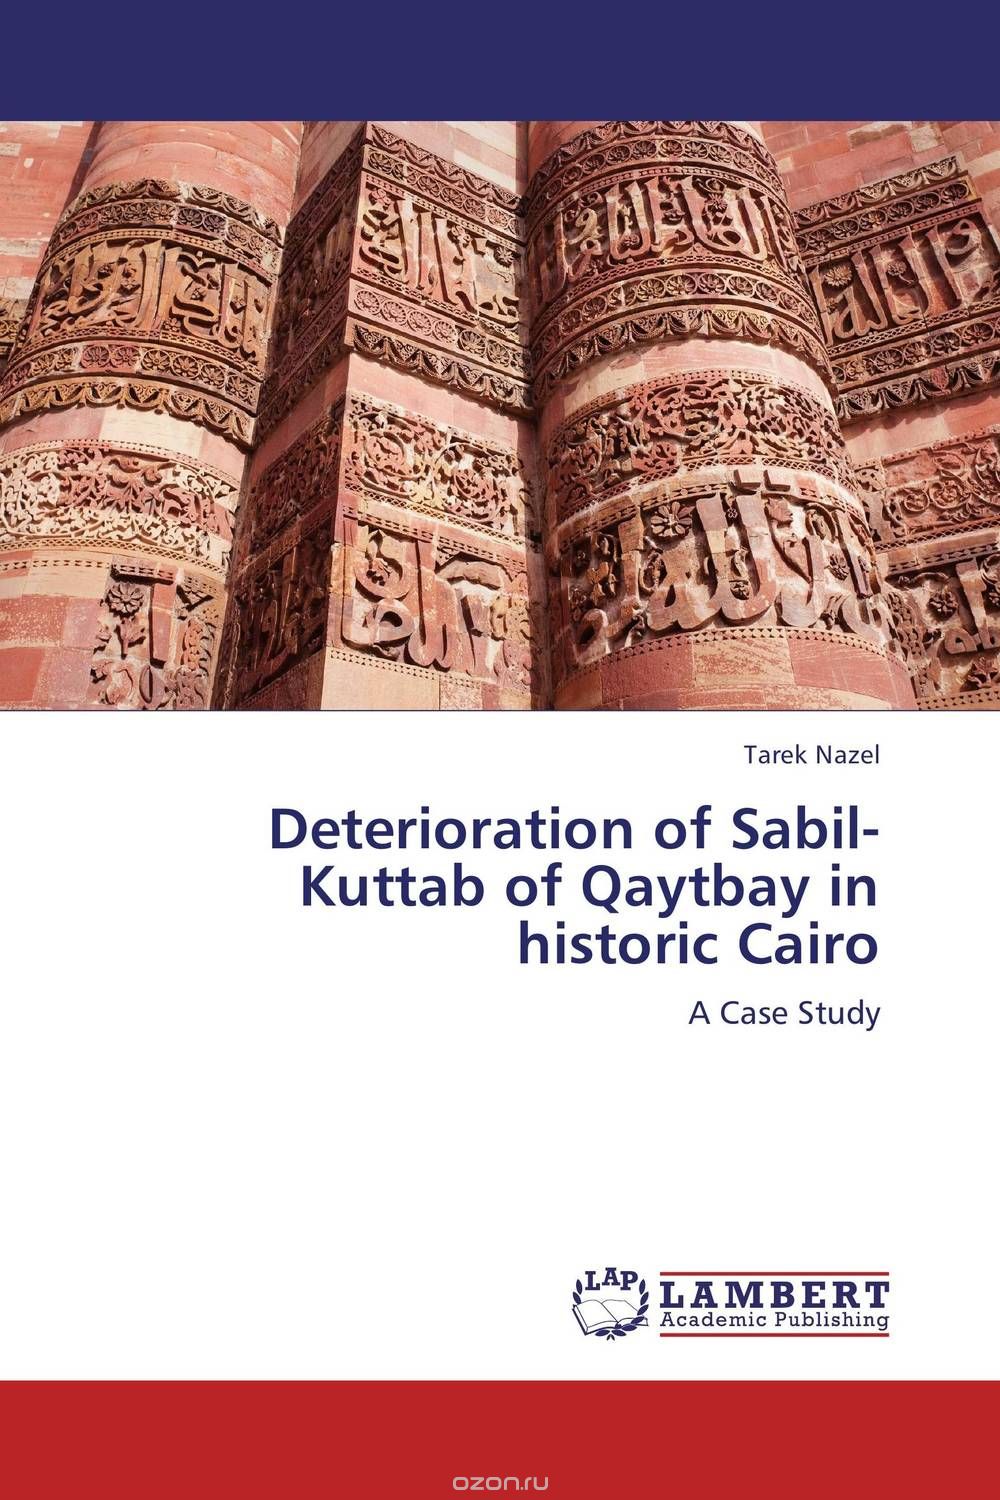 Скачать книгу "Deterioration of Sabil-Kuttab of Qaytbay in historic Cairo"